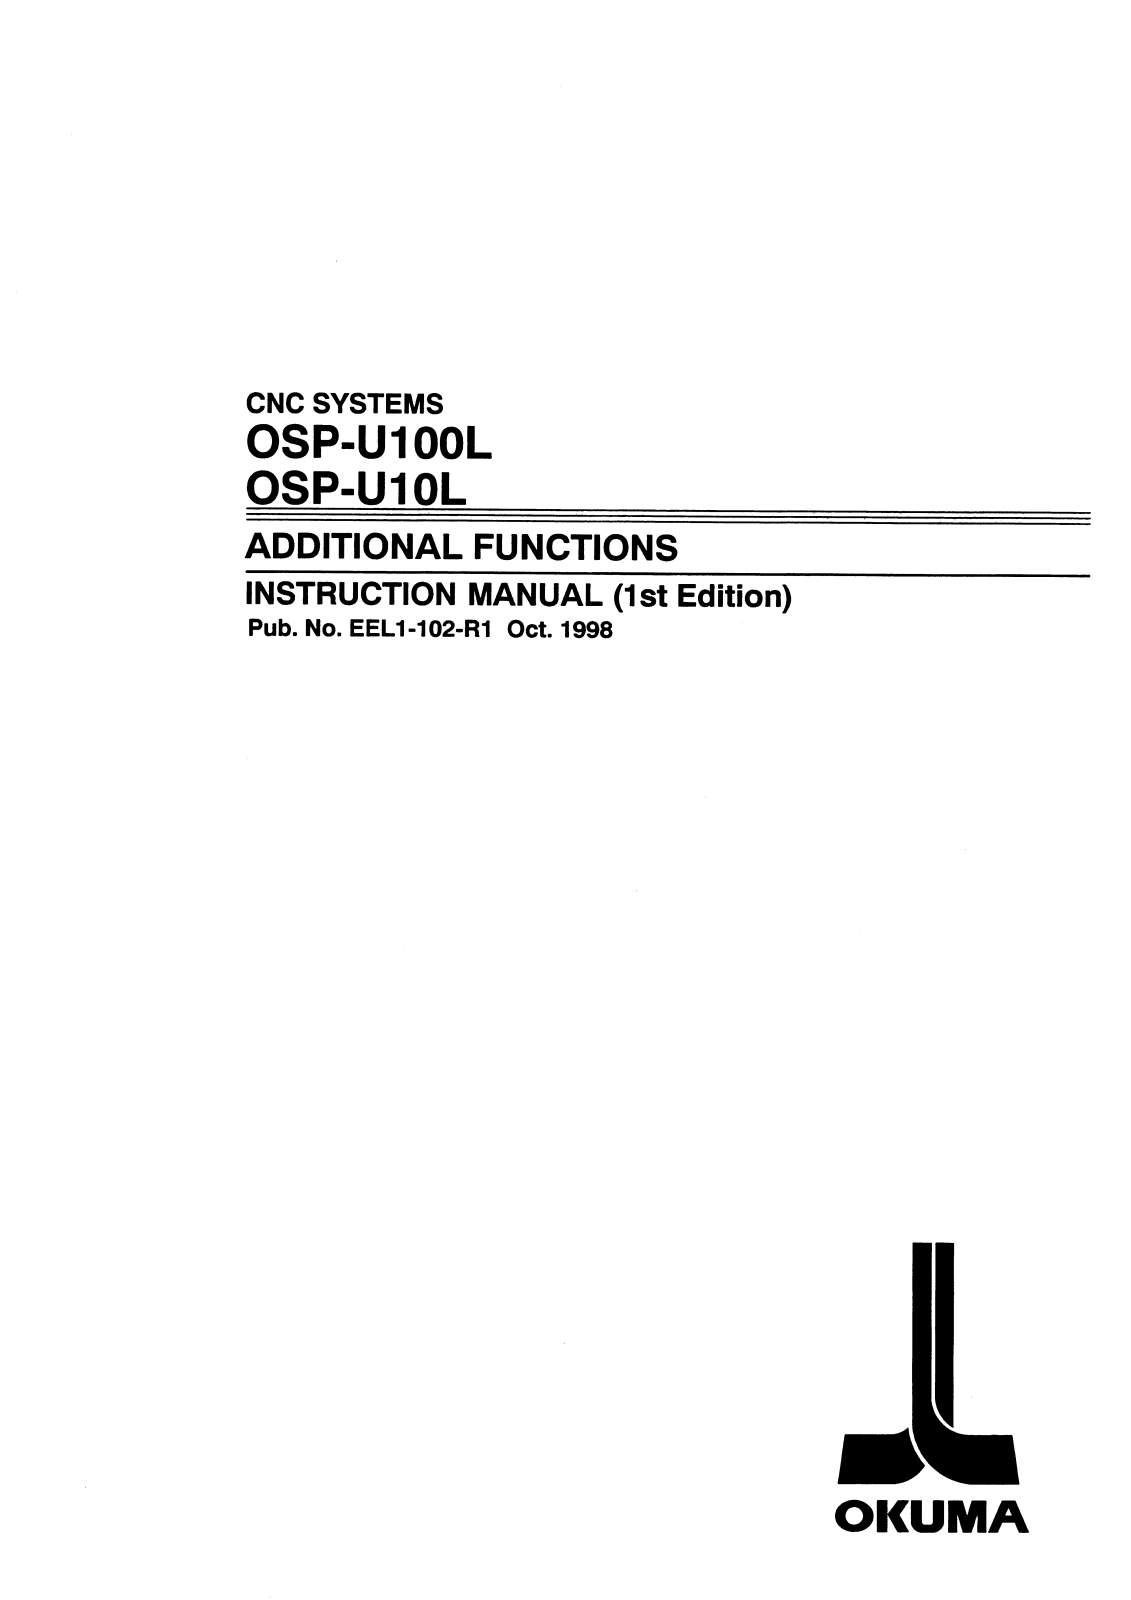 okuma OSP-U100L, OSP-U10L Instruction Manual